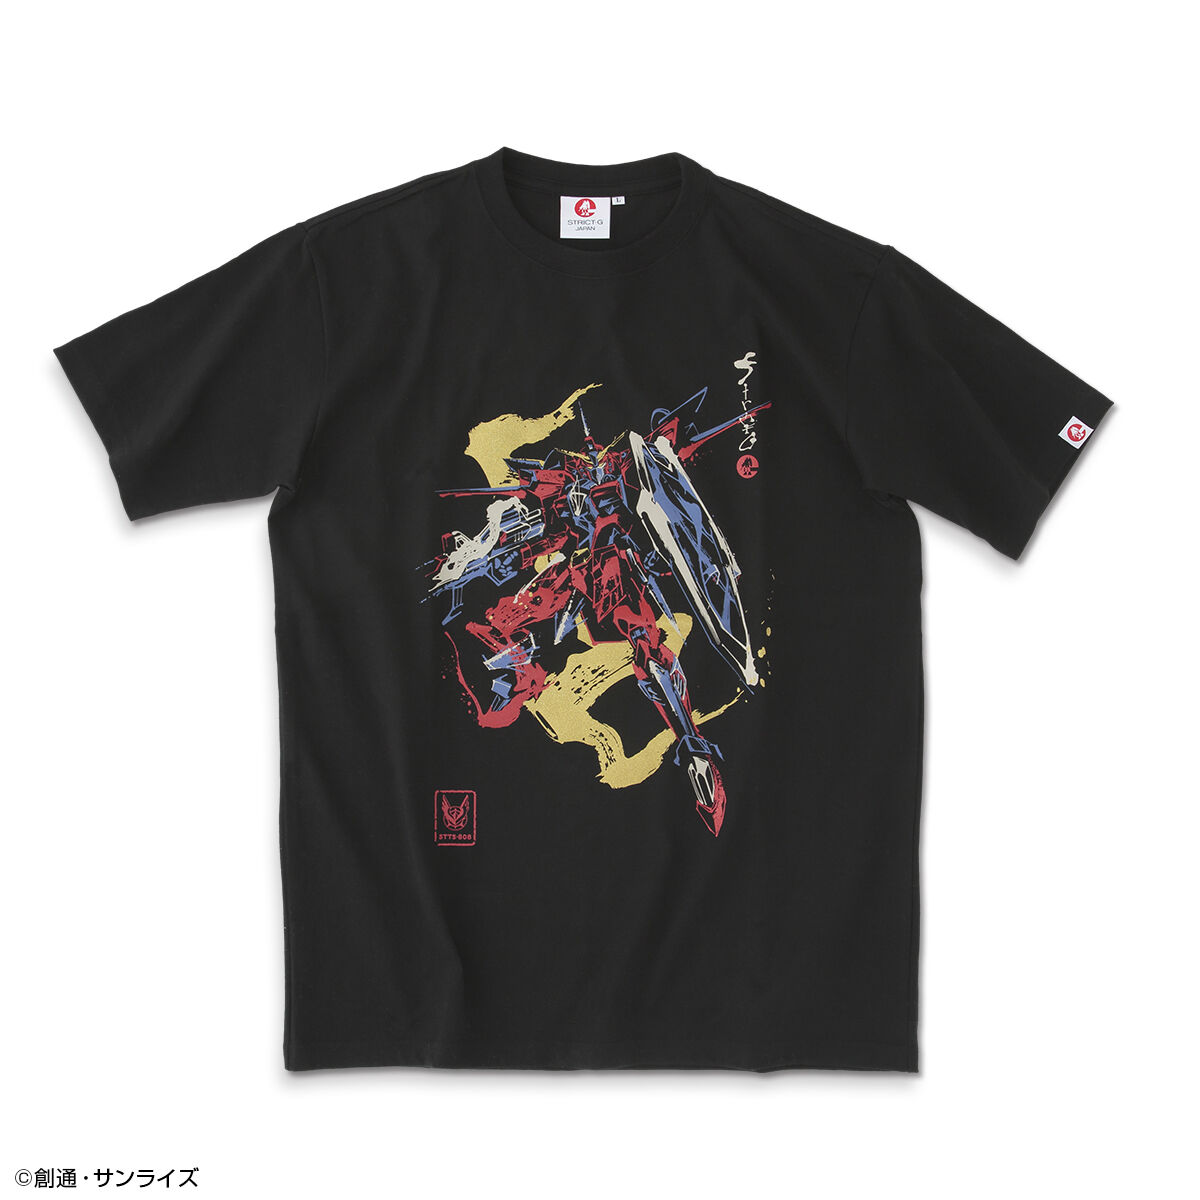 STRICT-G JAPAN『機動戦士ガンダムSEED FREEDOM』Tシャツ 筆絵風 